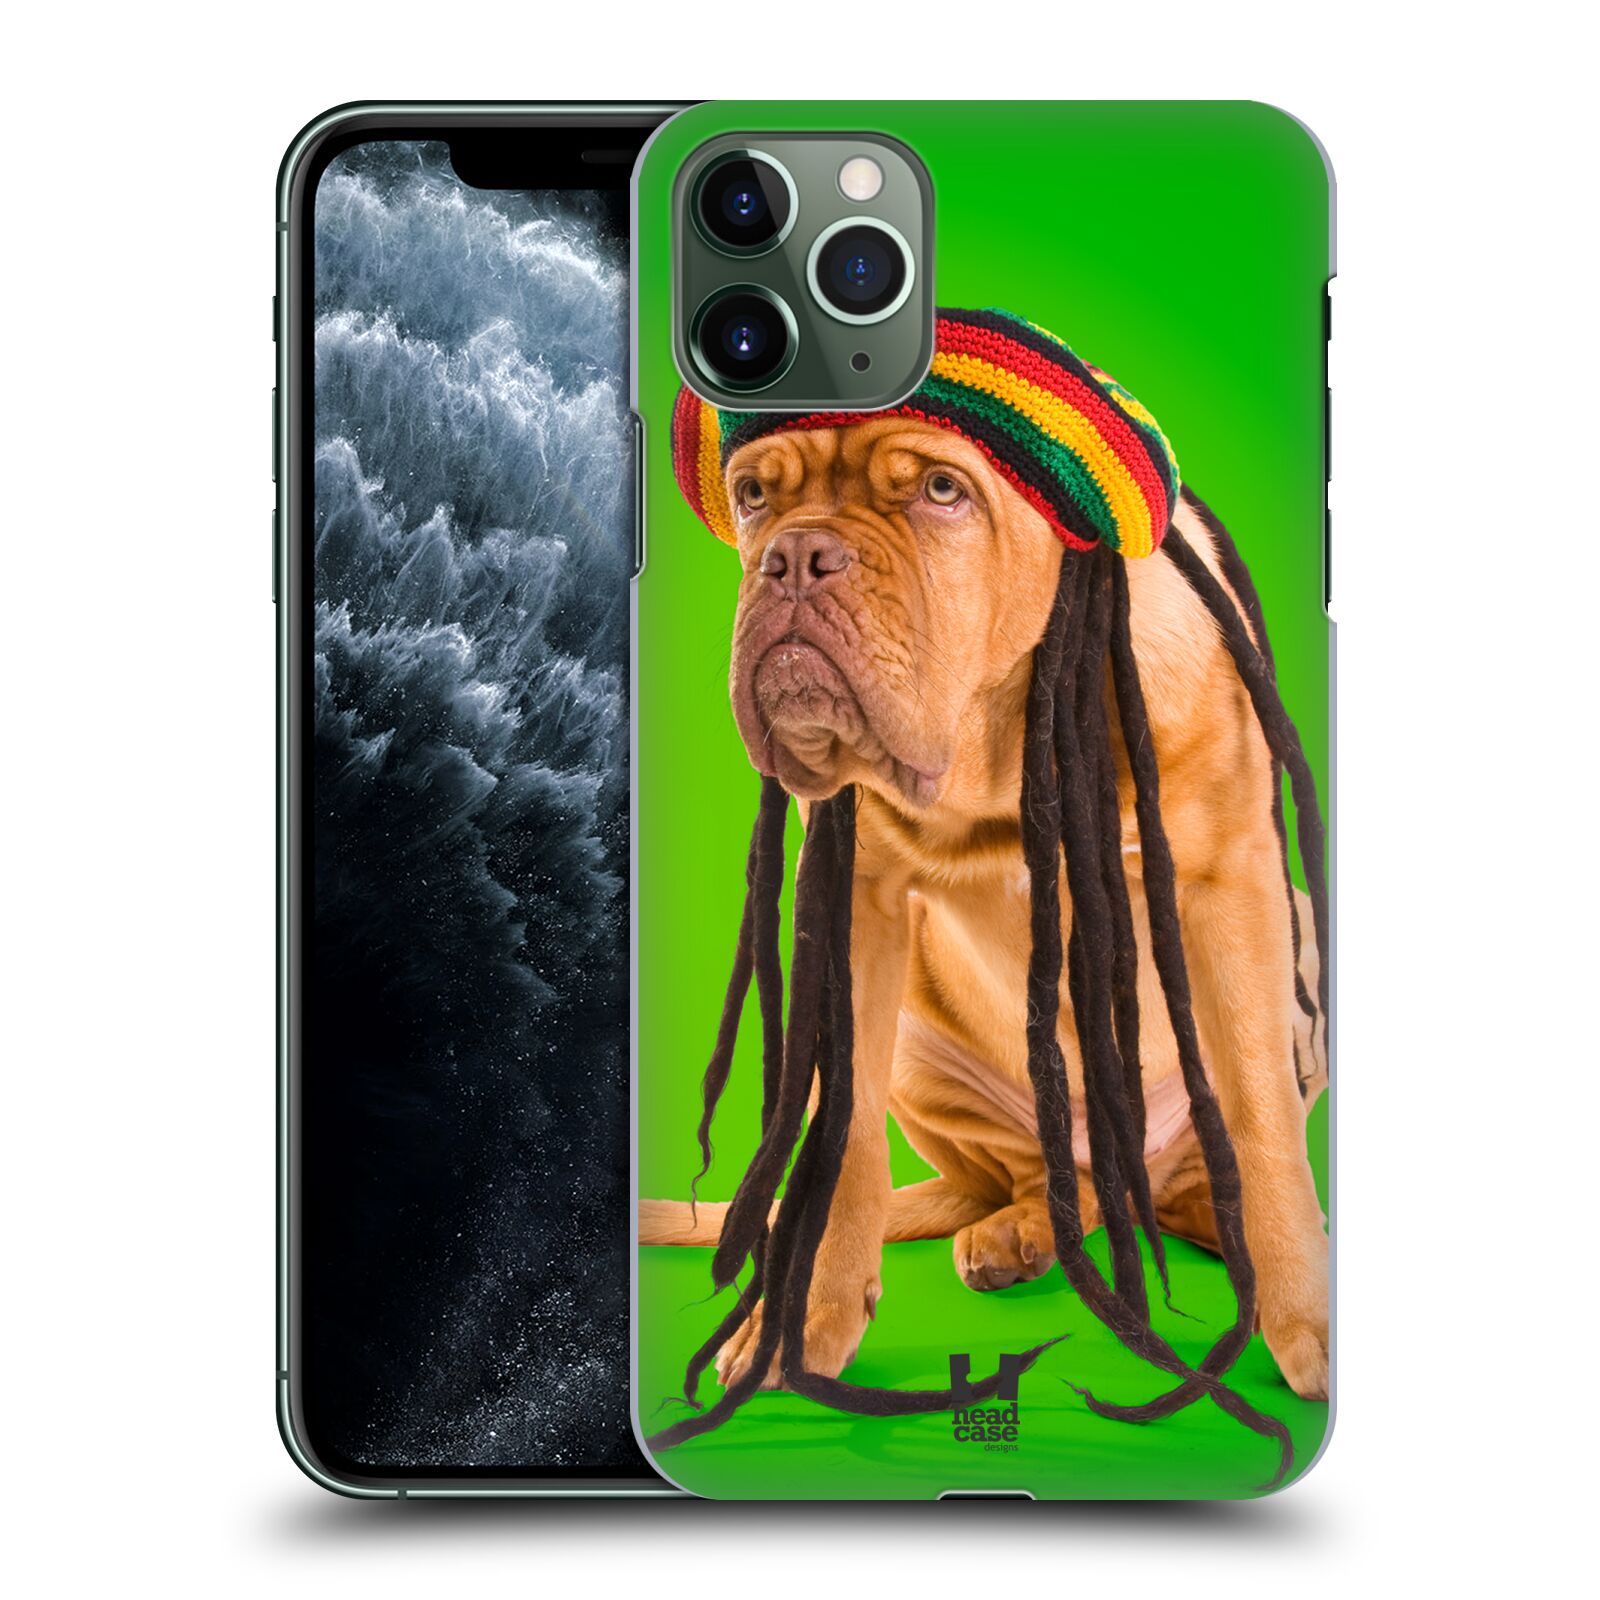 Pouzdro na mobil Apple Iphone 11 PRO MAX - HEAD CASE - vzor Legrační zvířátka pejsek dredy Rastafarián